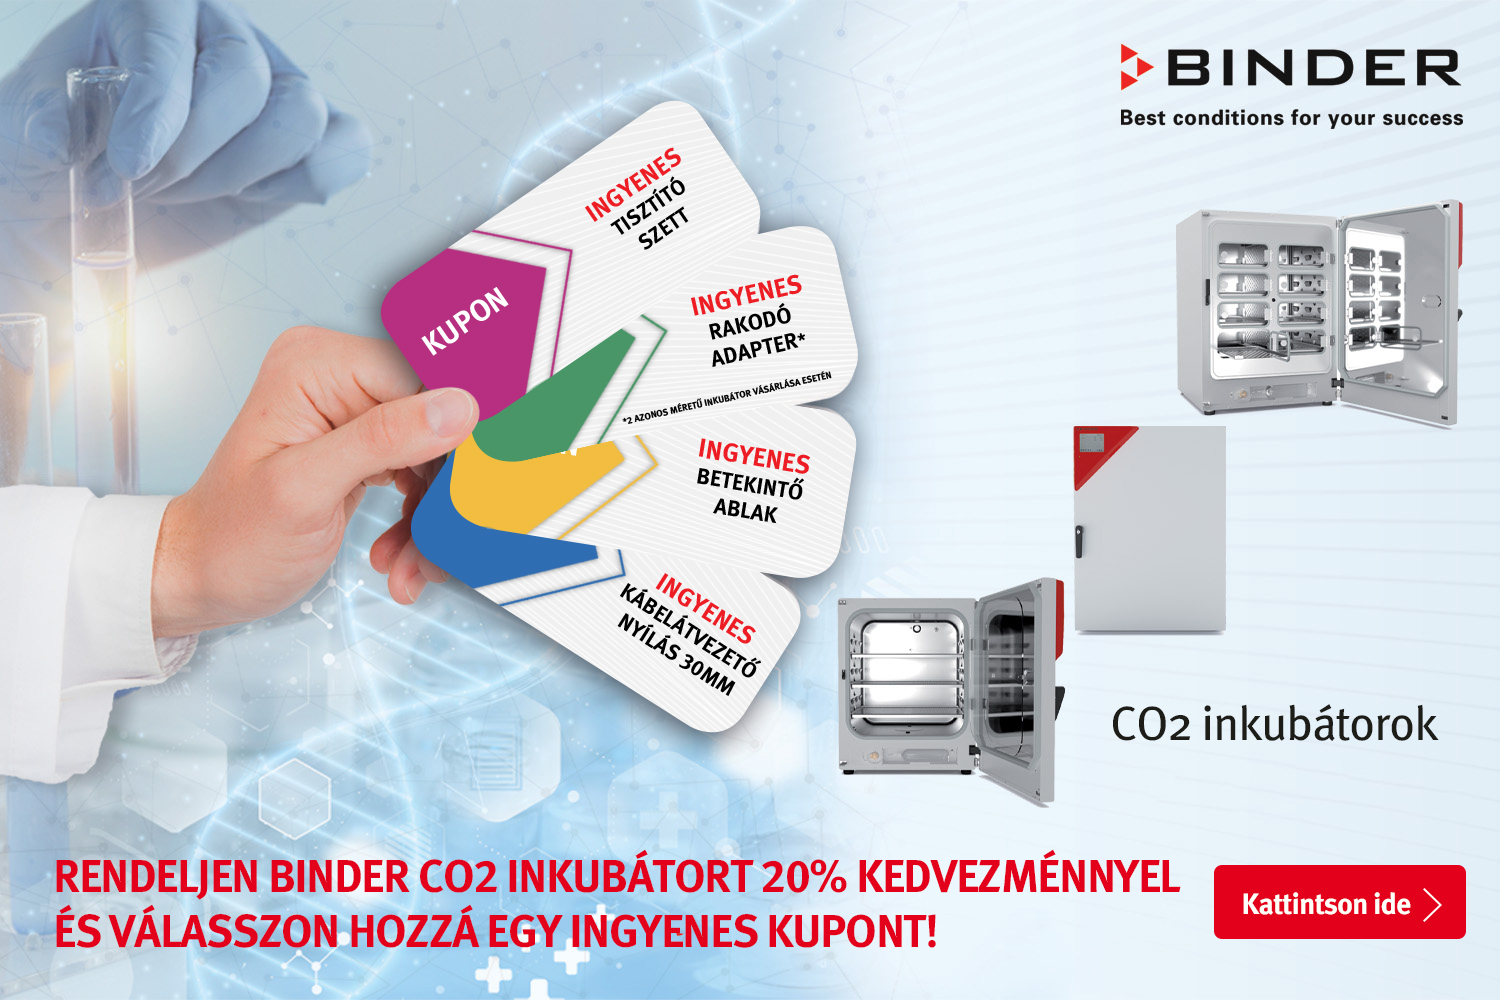 Binder CB 170 CO₂ inkubátor